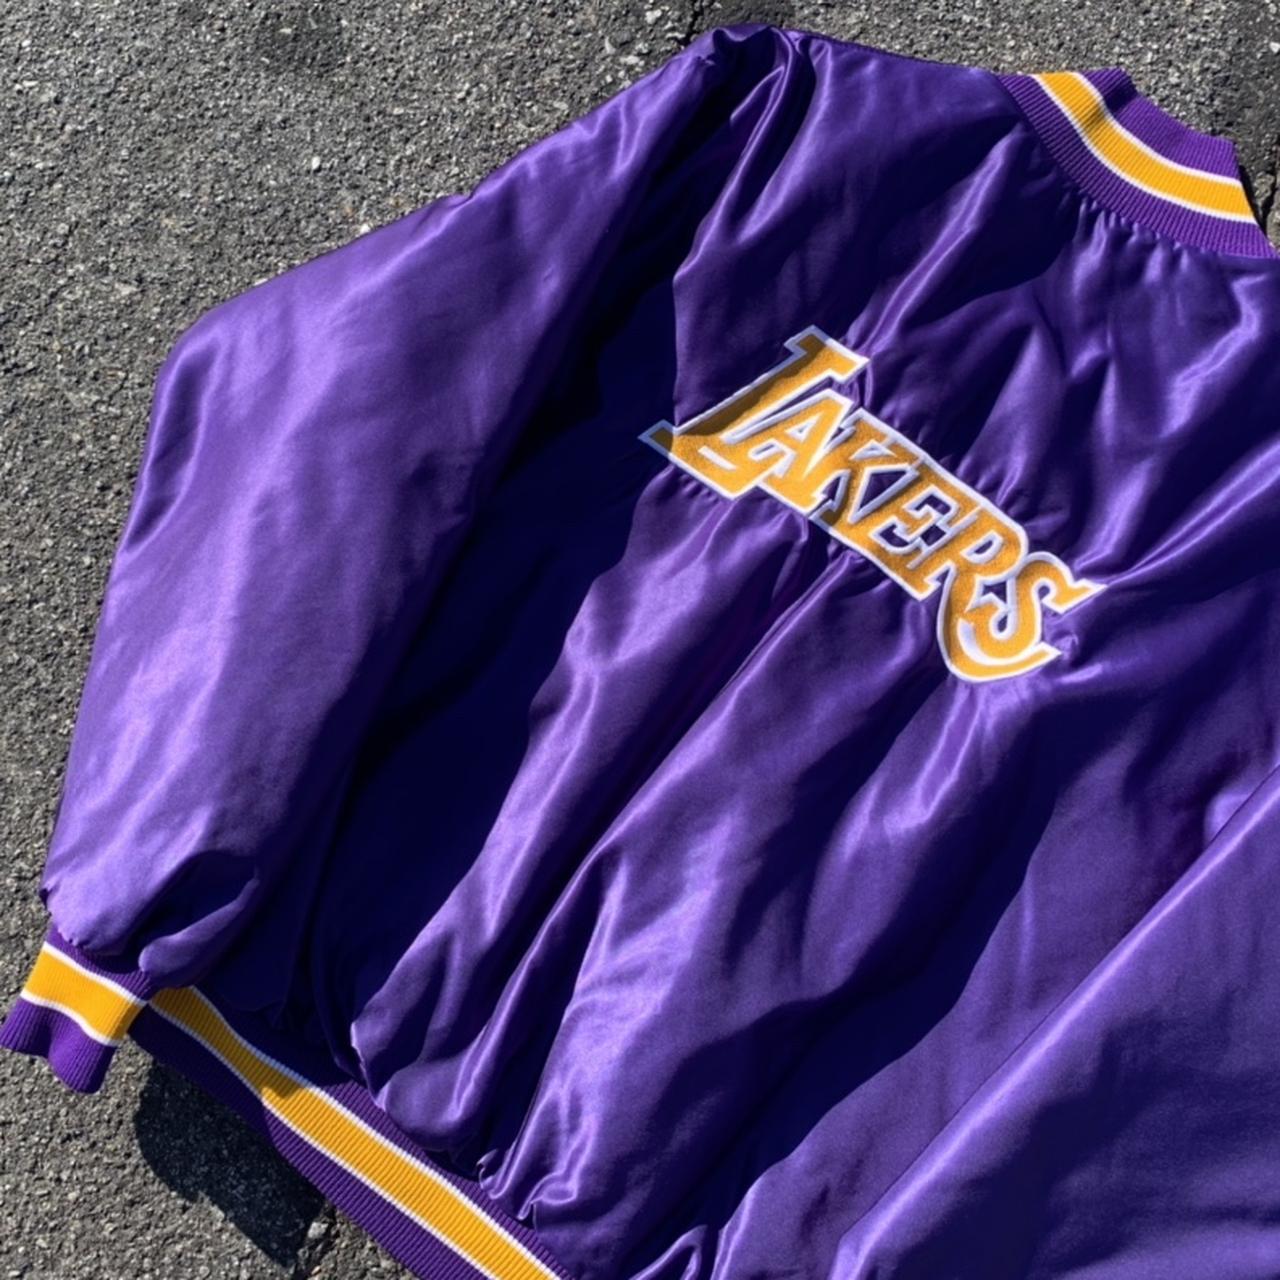 Vintage 80s Los Angeles Lakers Starter Jacket Mens XL NBA Basketball Satin